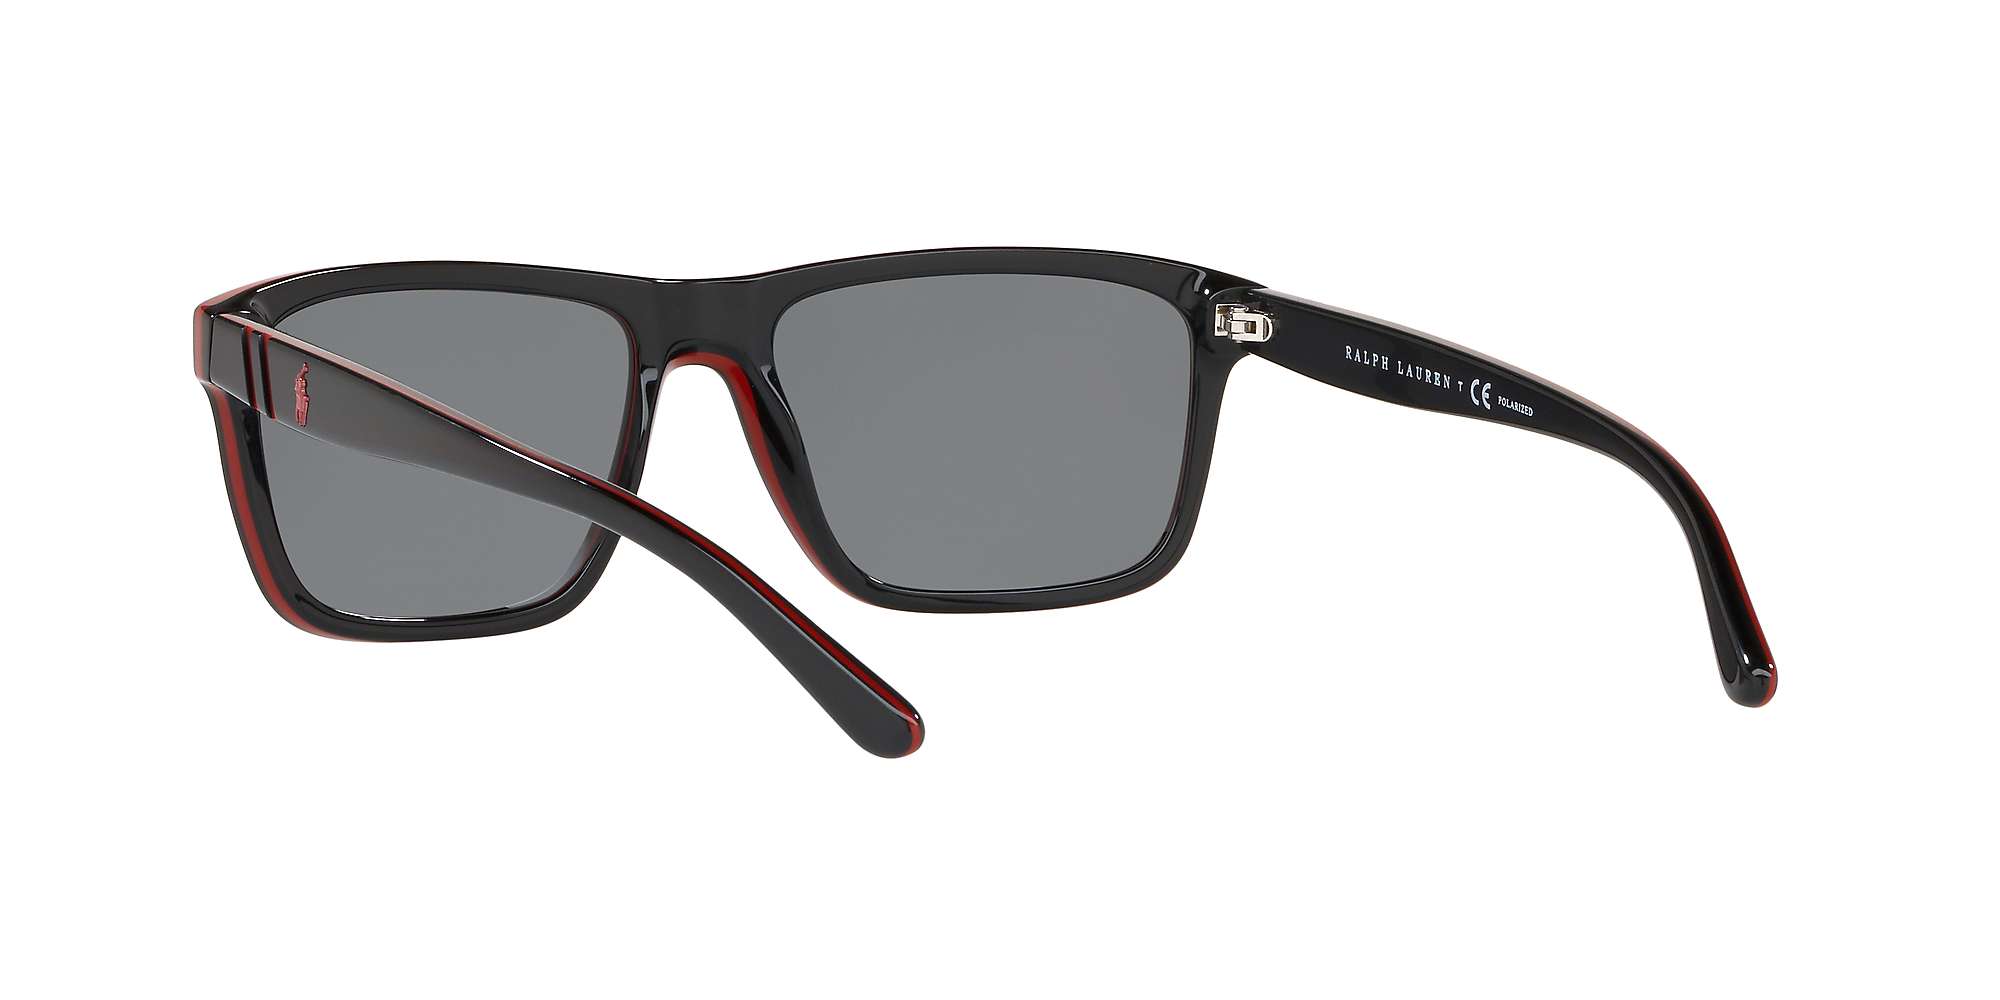 Buy Polo Ralph Lauren PH4153 Men's Polarised Square Sunglasses, Black/Red Online at johnlewis.com